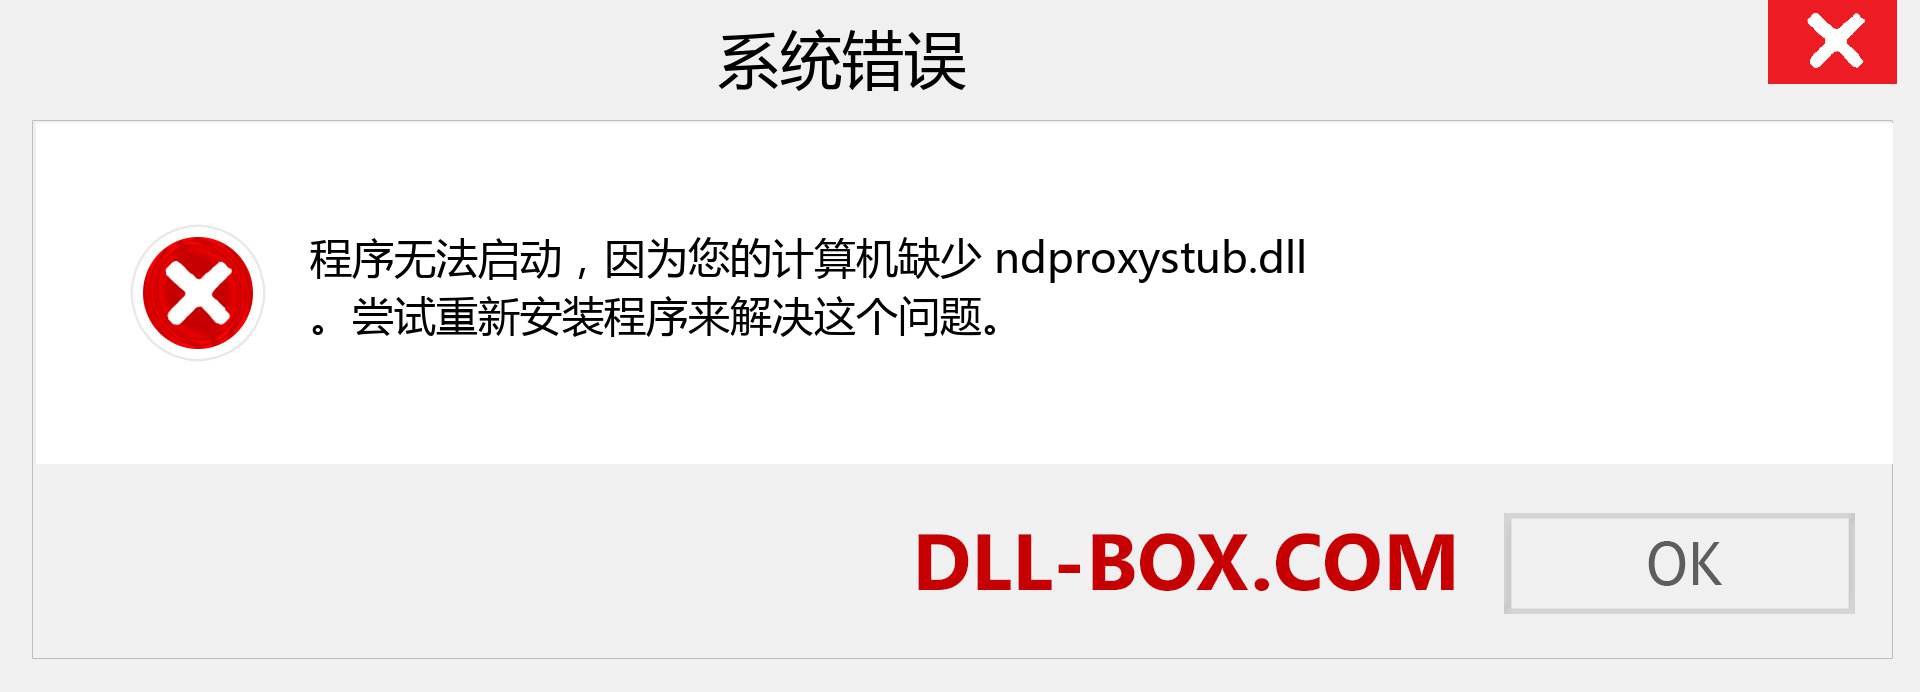 ndproxystub.dll 文件丢失？。 适用于 Windows 7、8、10 的下载 - 修复 Windows、照片、图像上的 ndproxystub dll 丢失错误